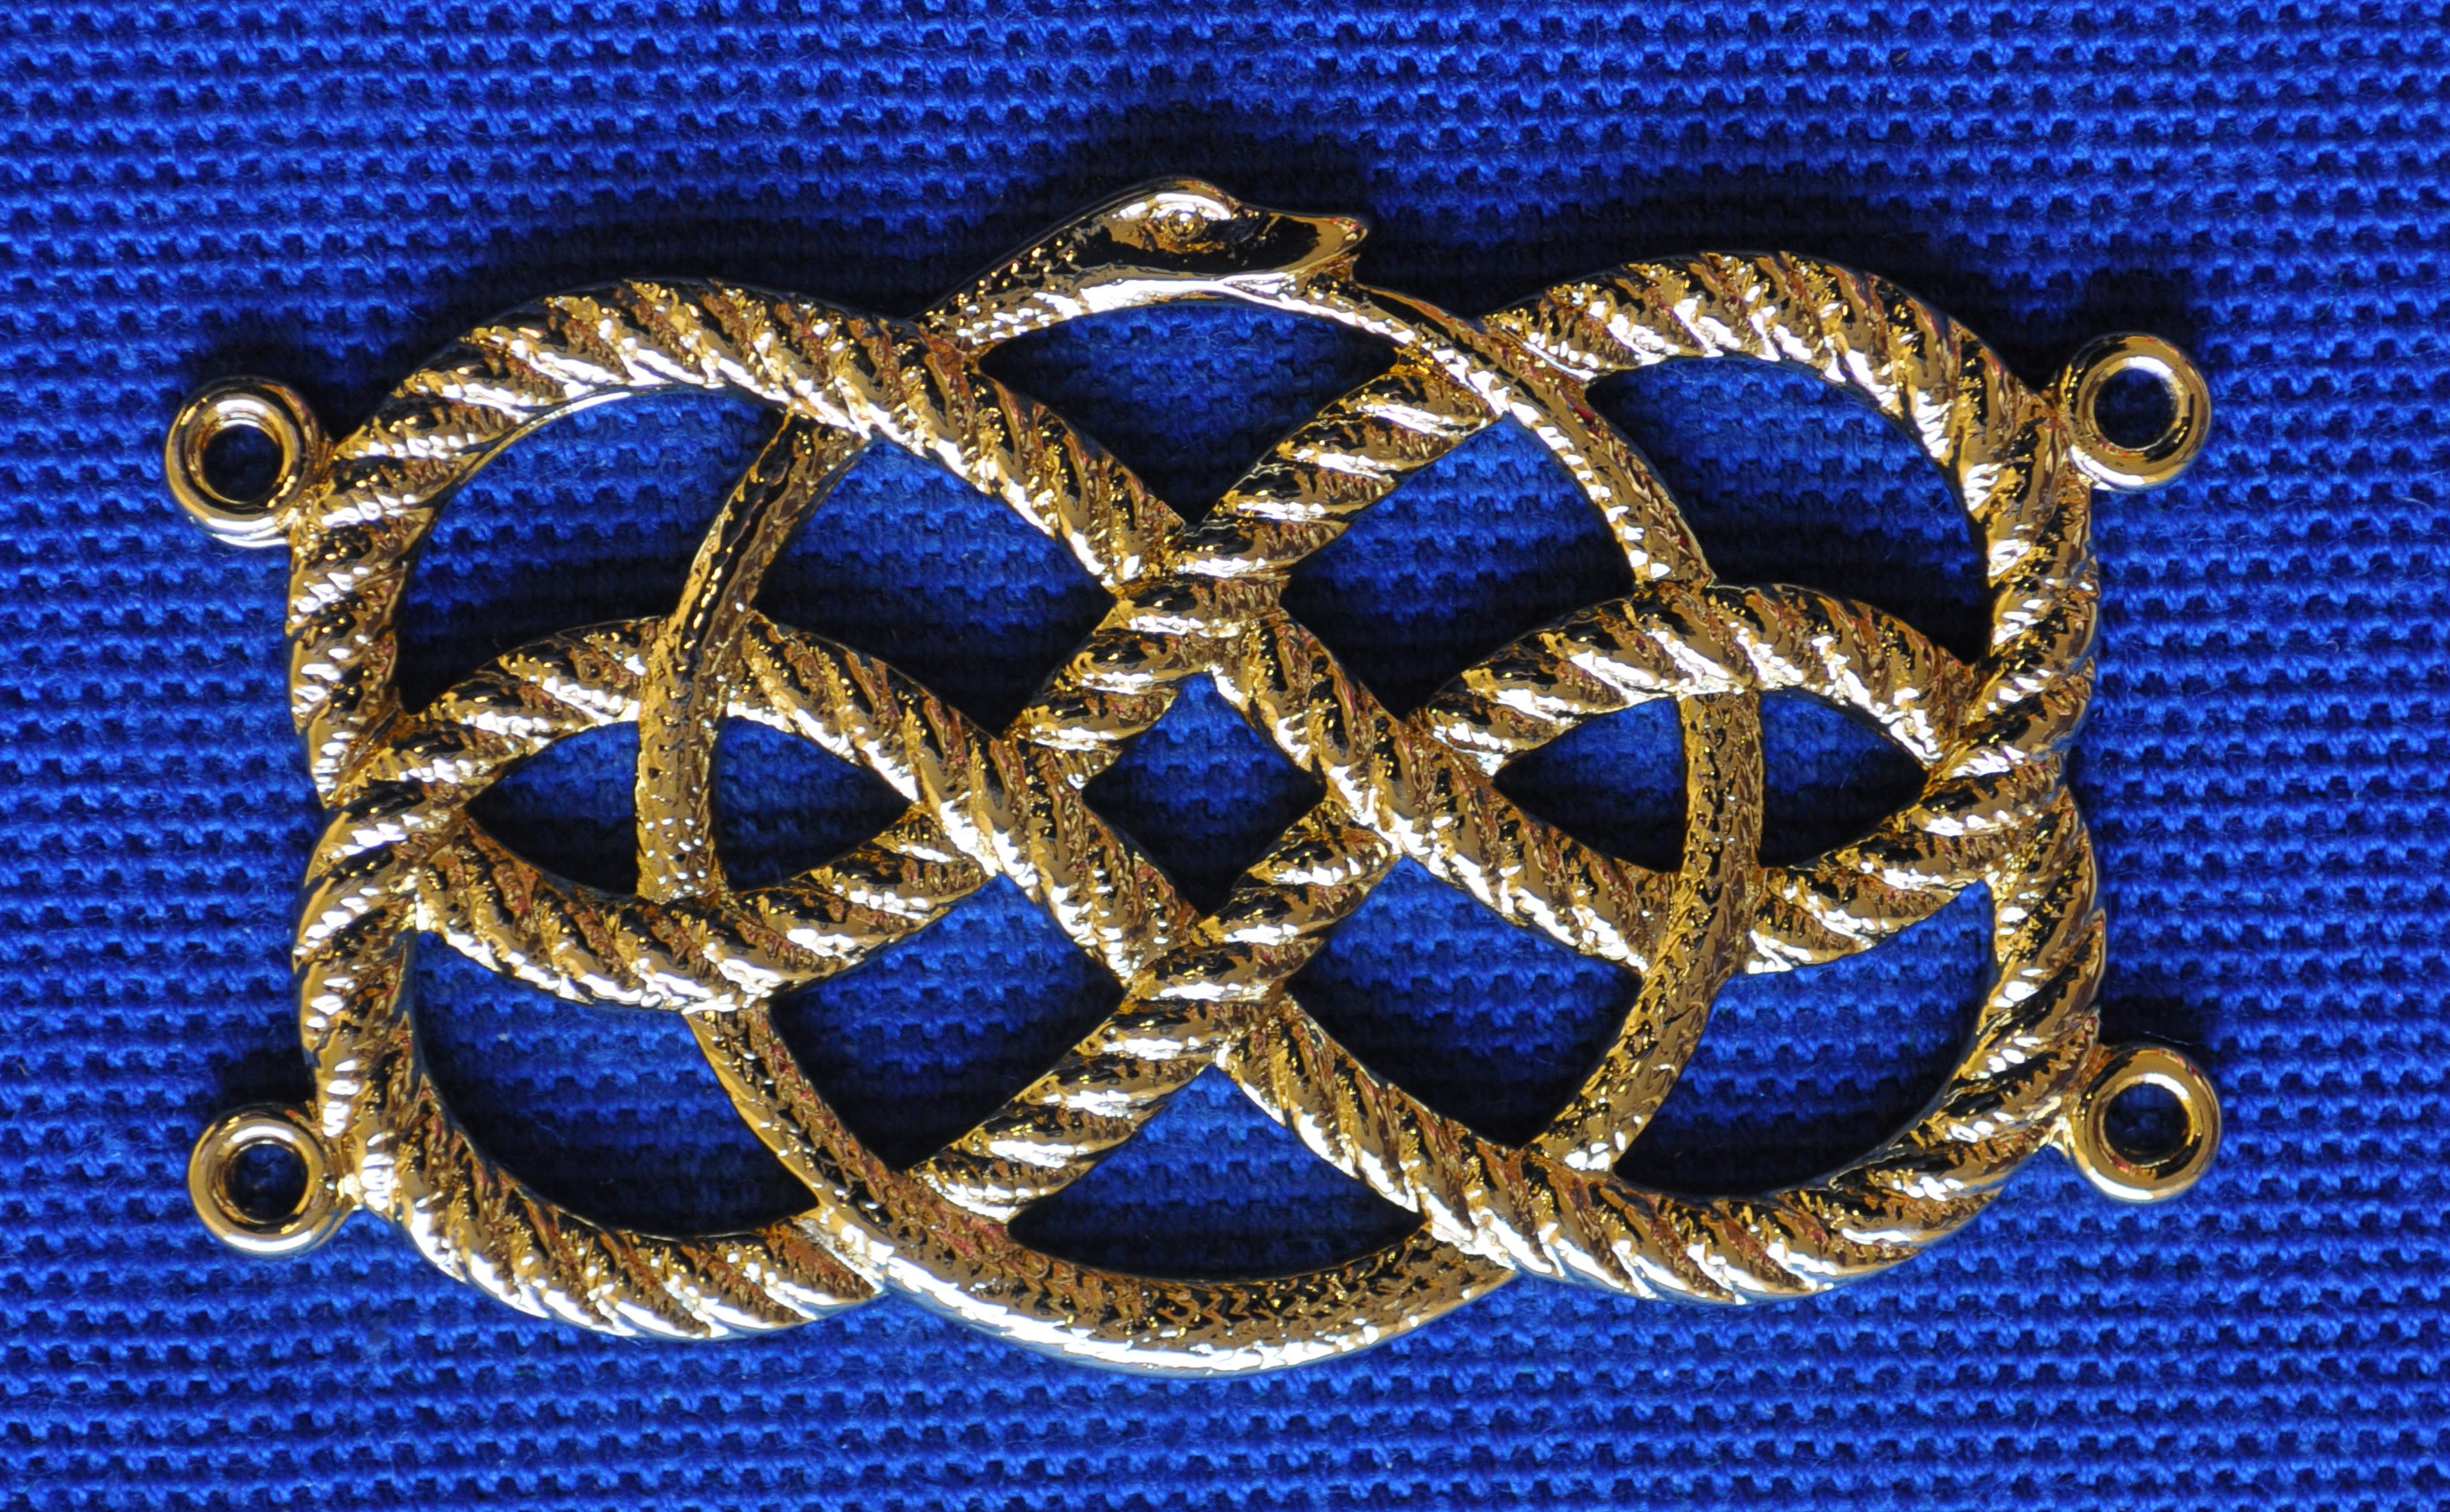 Craft Chain Metalwork - Snake & Ropes - Gilt